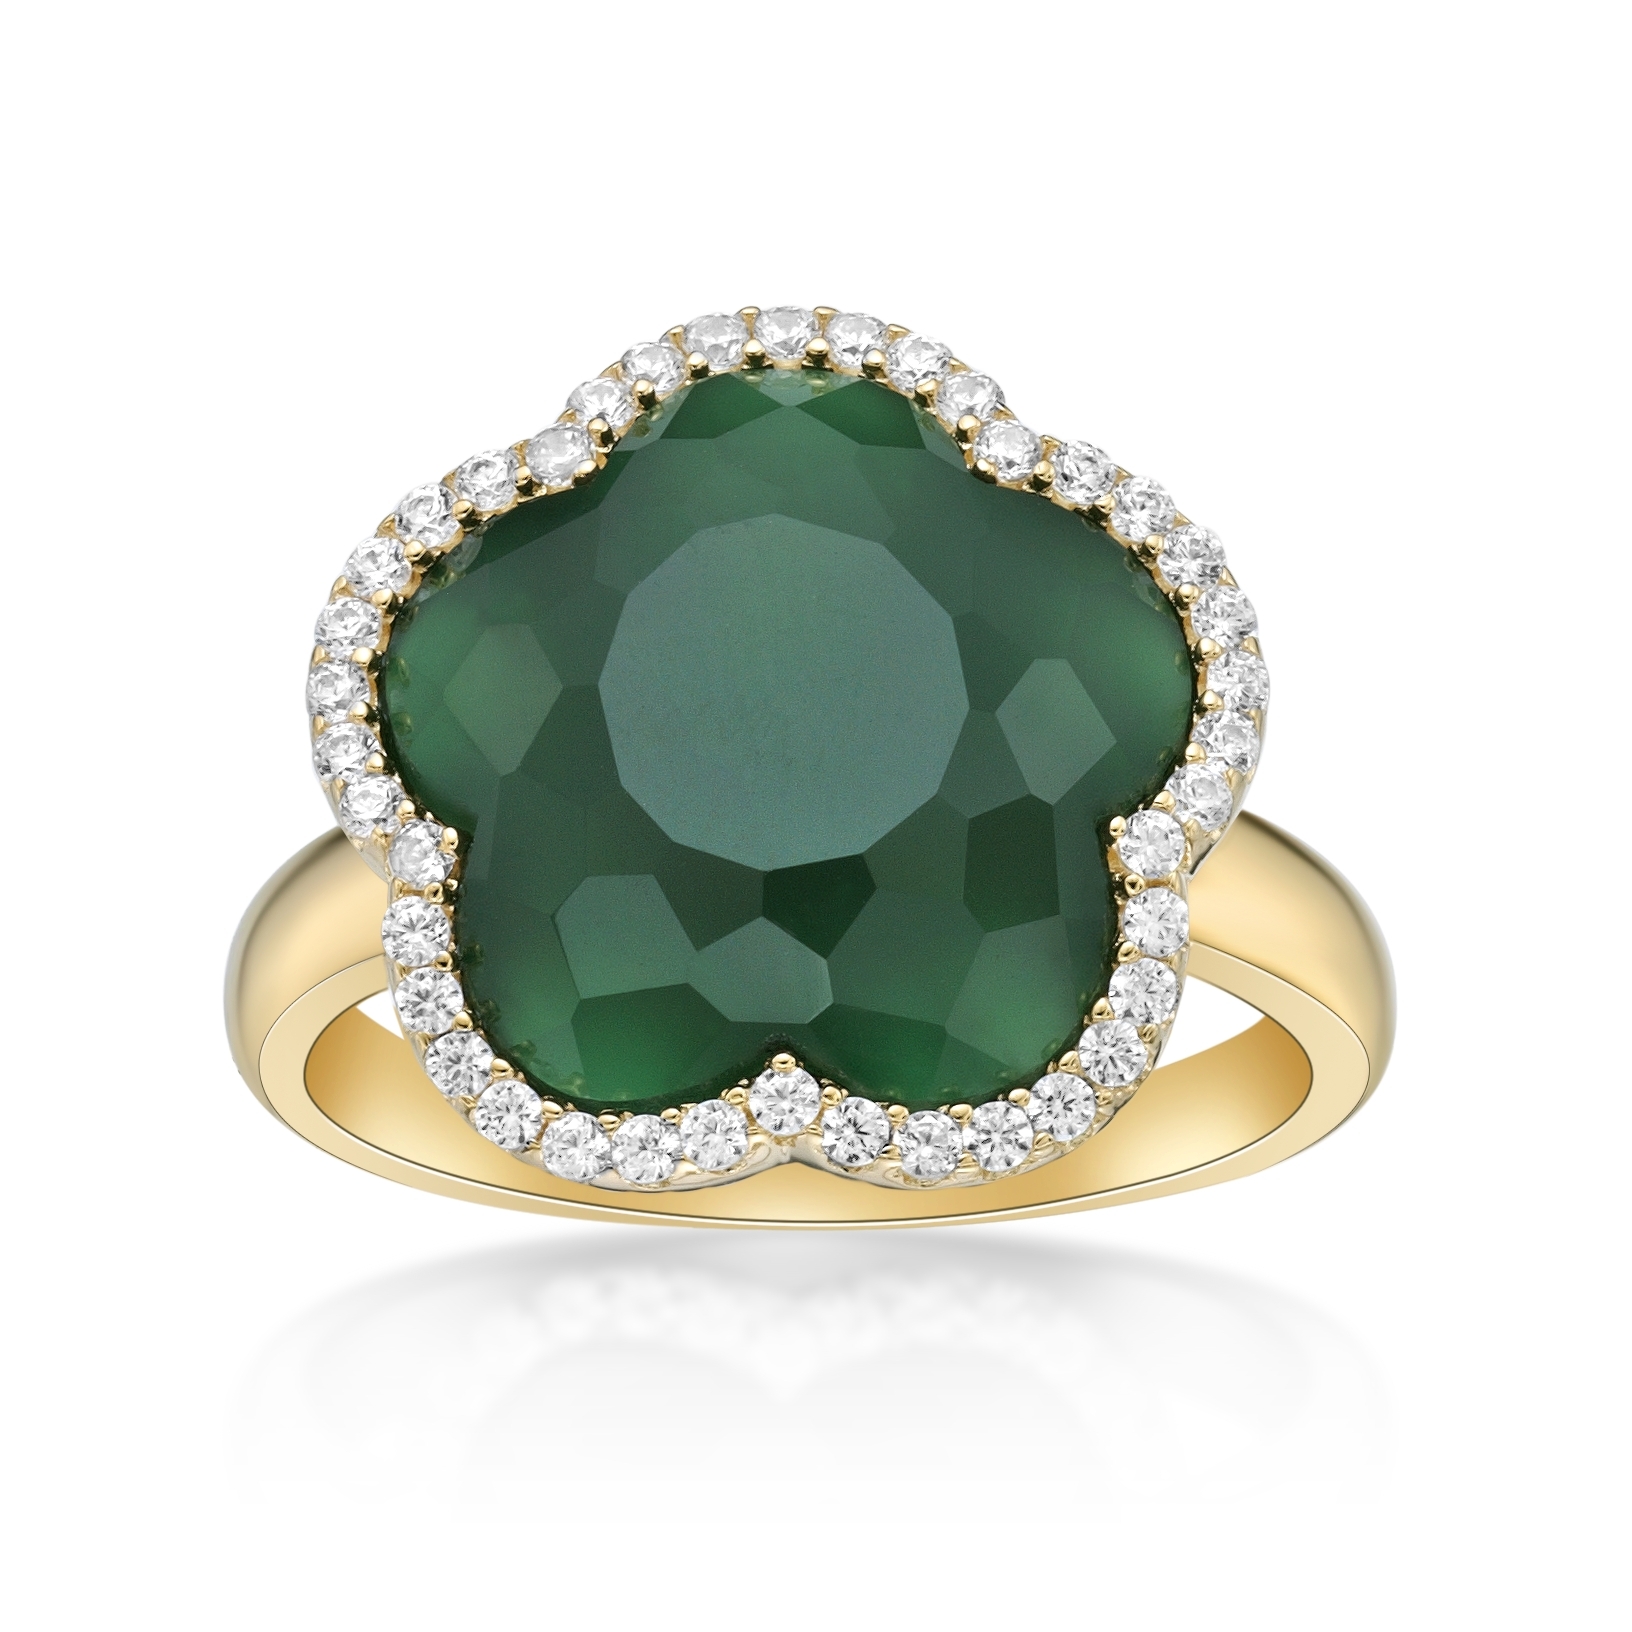 Lavari Jewelers Women’s Green Onyx Five Petal Flower Ring, 925 Sterling Silver, Size 6